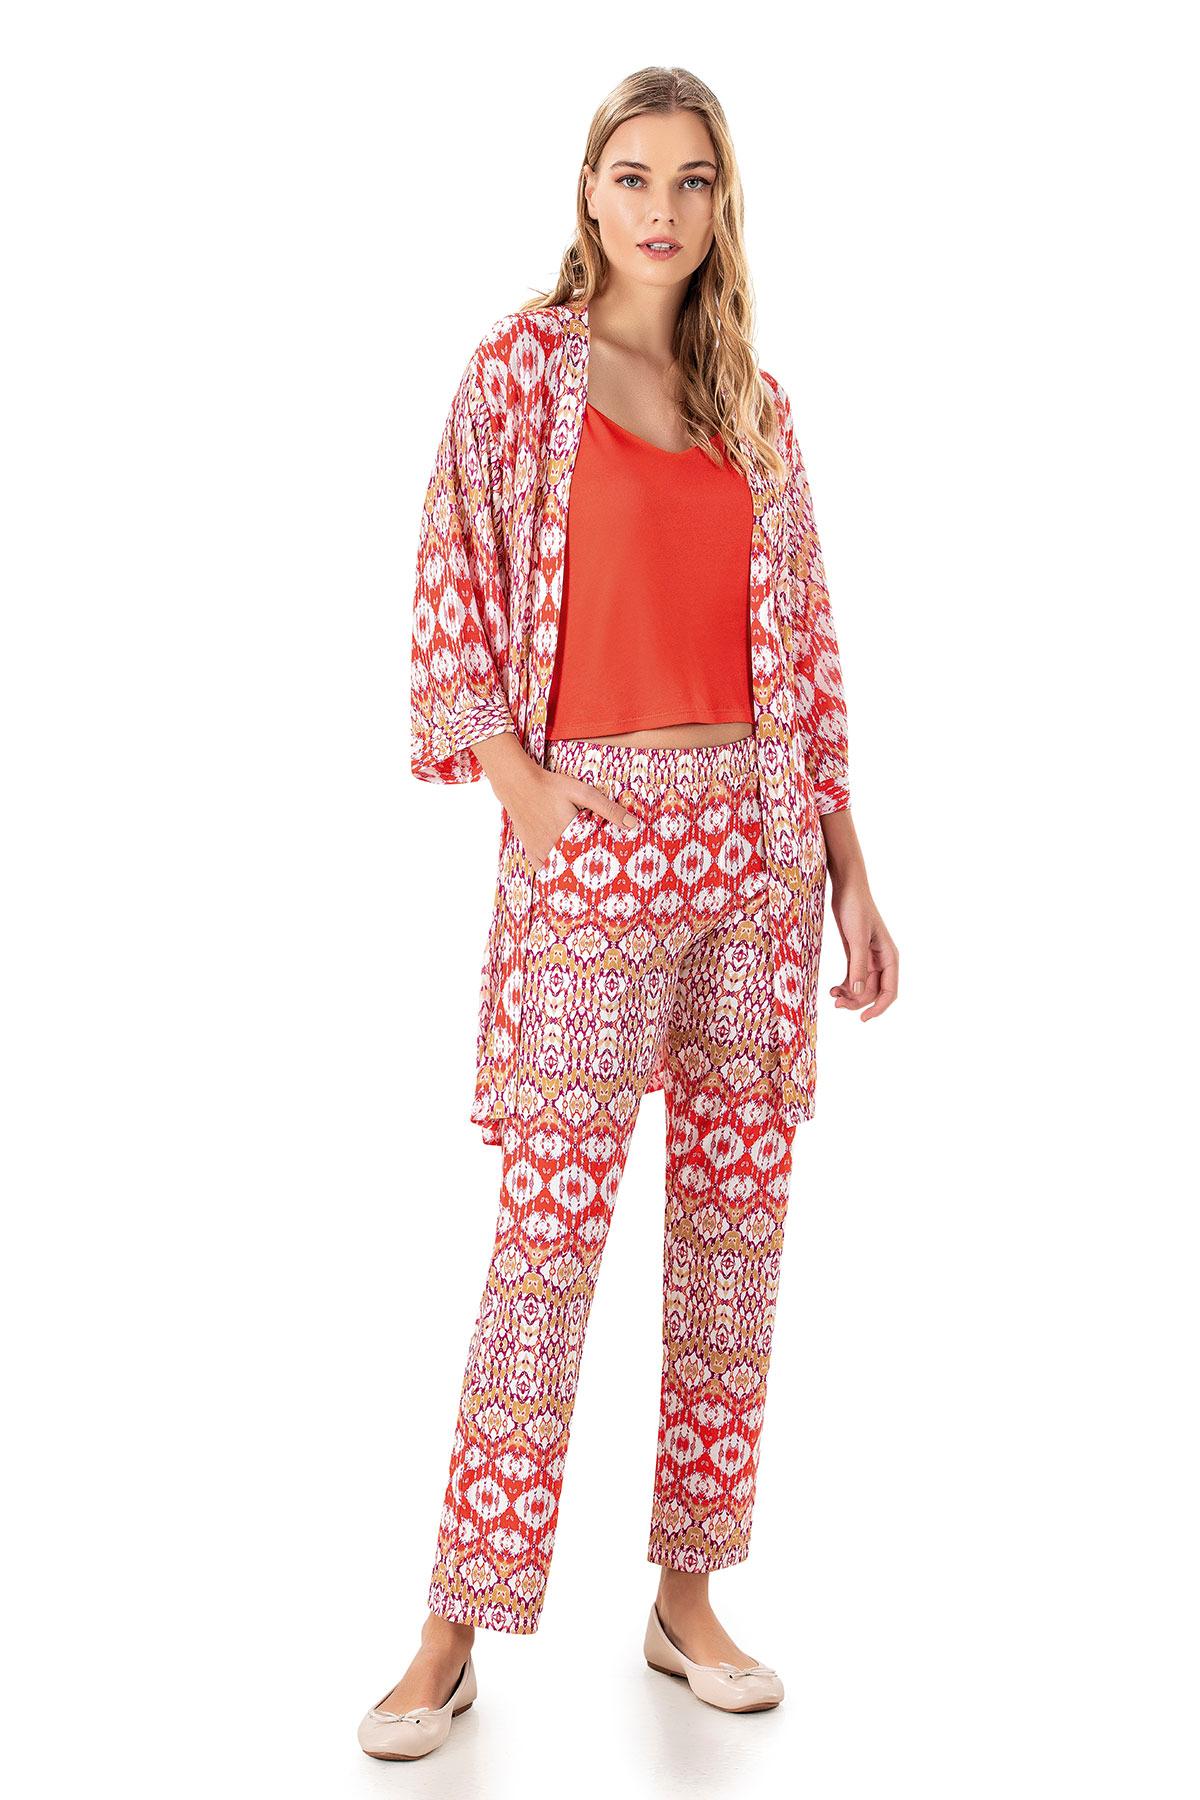 Selected image for DOWRY Ženski set top, kimono i pantalone 1513 narandžasti